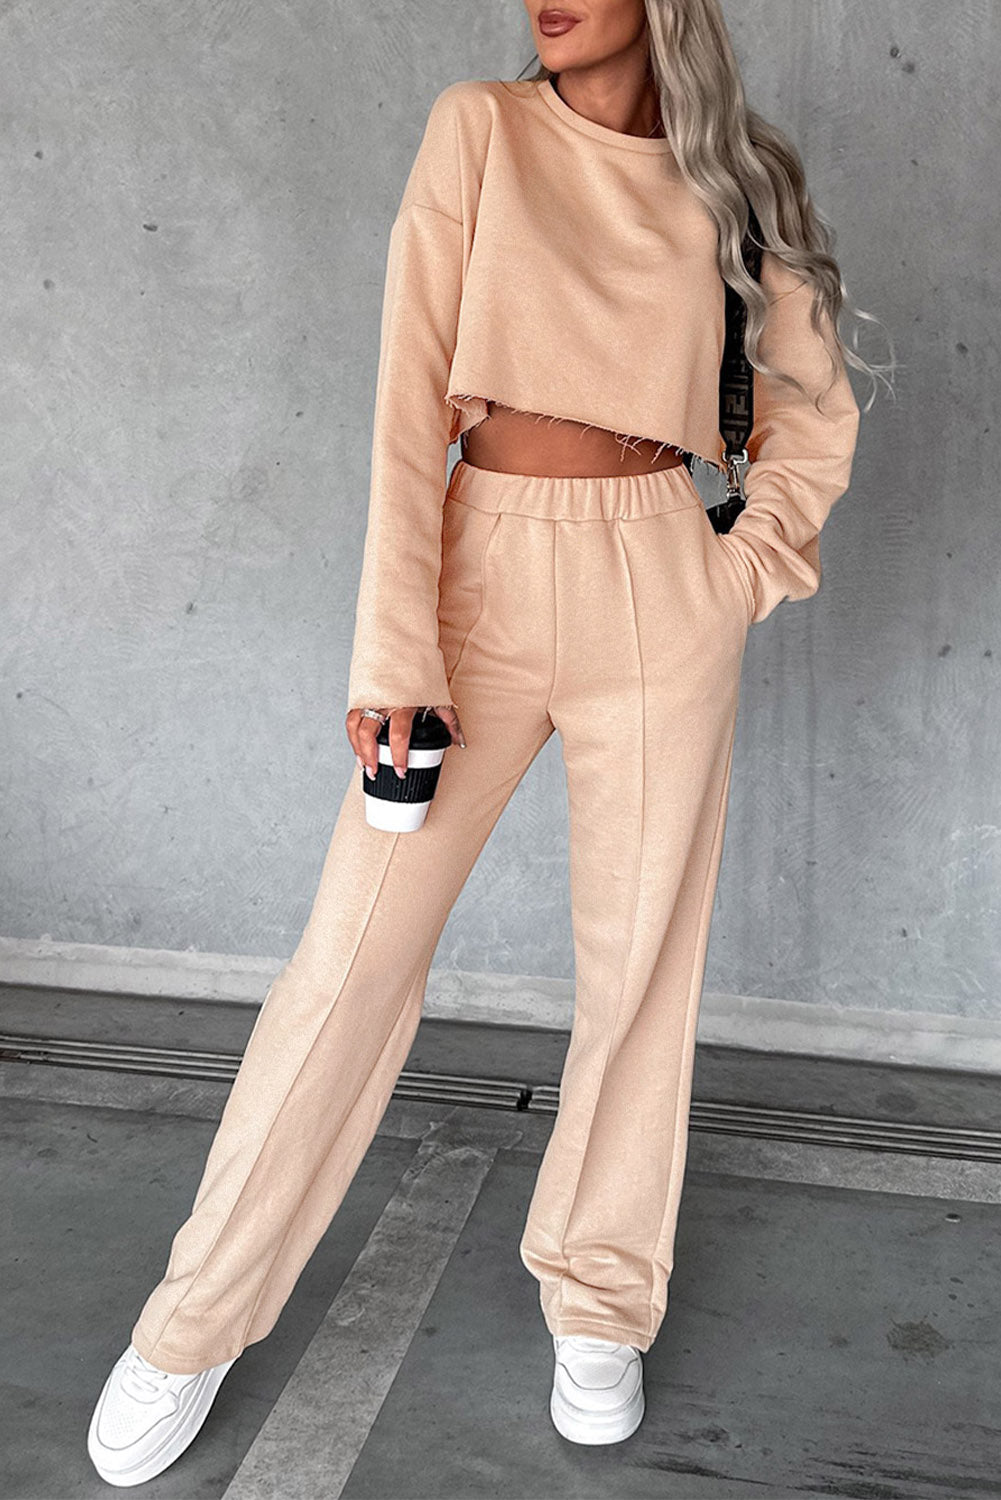 Khaki 50%Polyester+50%Cotton Khaki Long Sleeve Distressed Crop Top Wide Leg Pants Outfit Set - women's pants set at TFC&H Co.